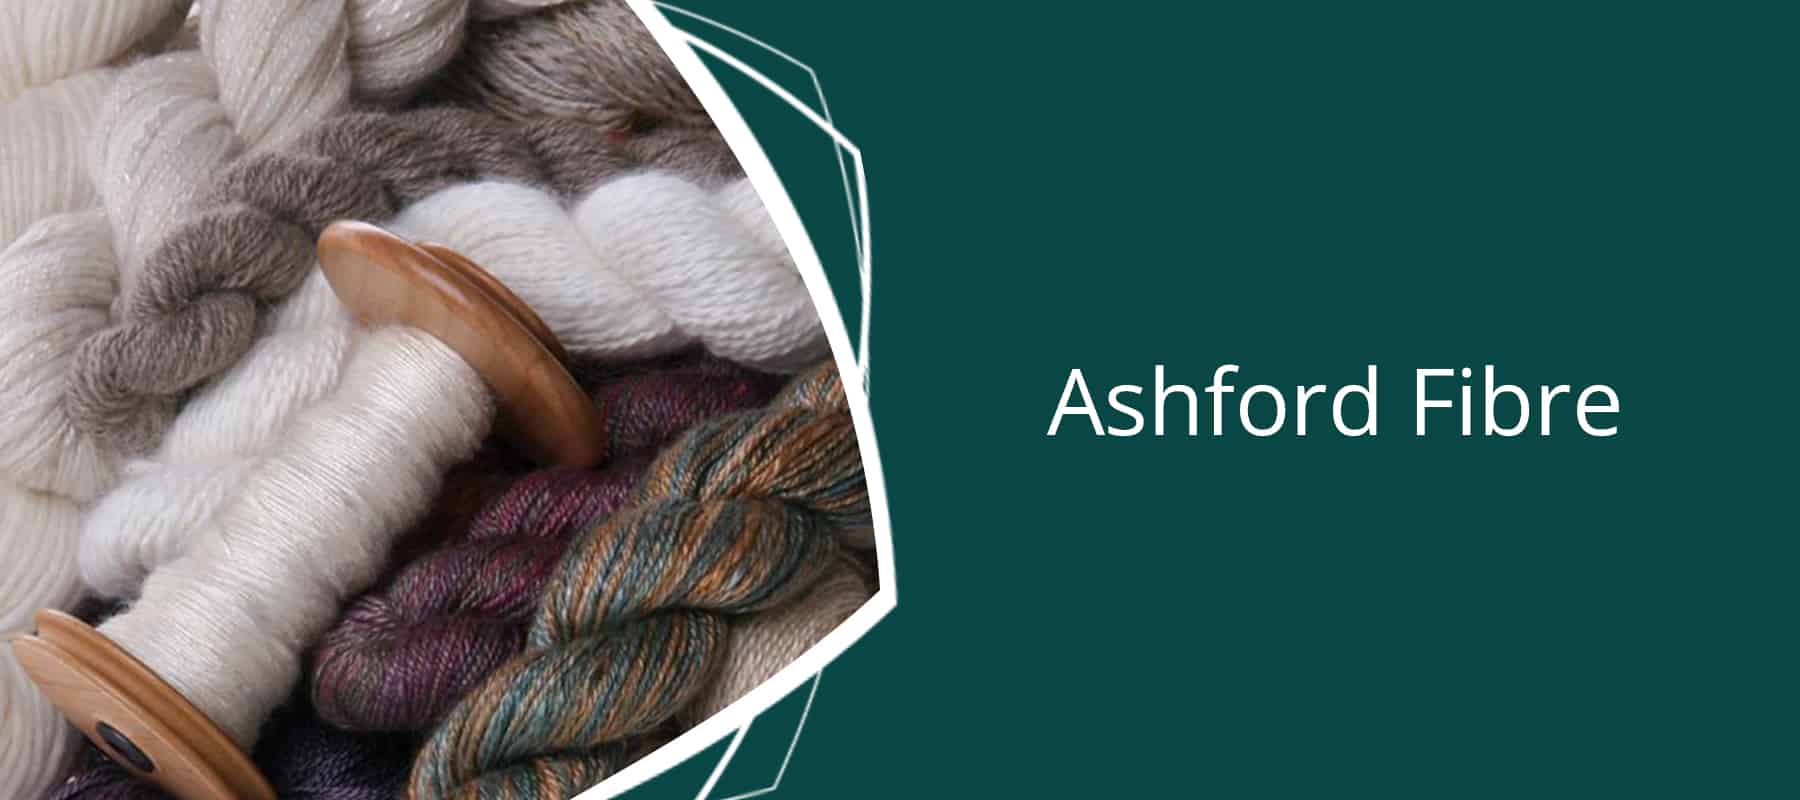 Ashford Fibre - Thread Collective Australia